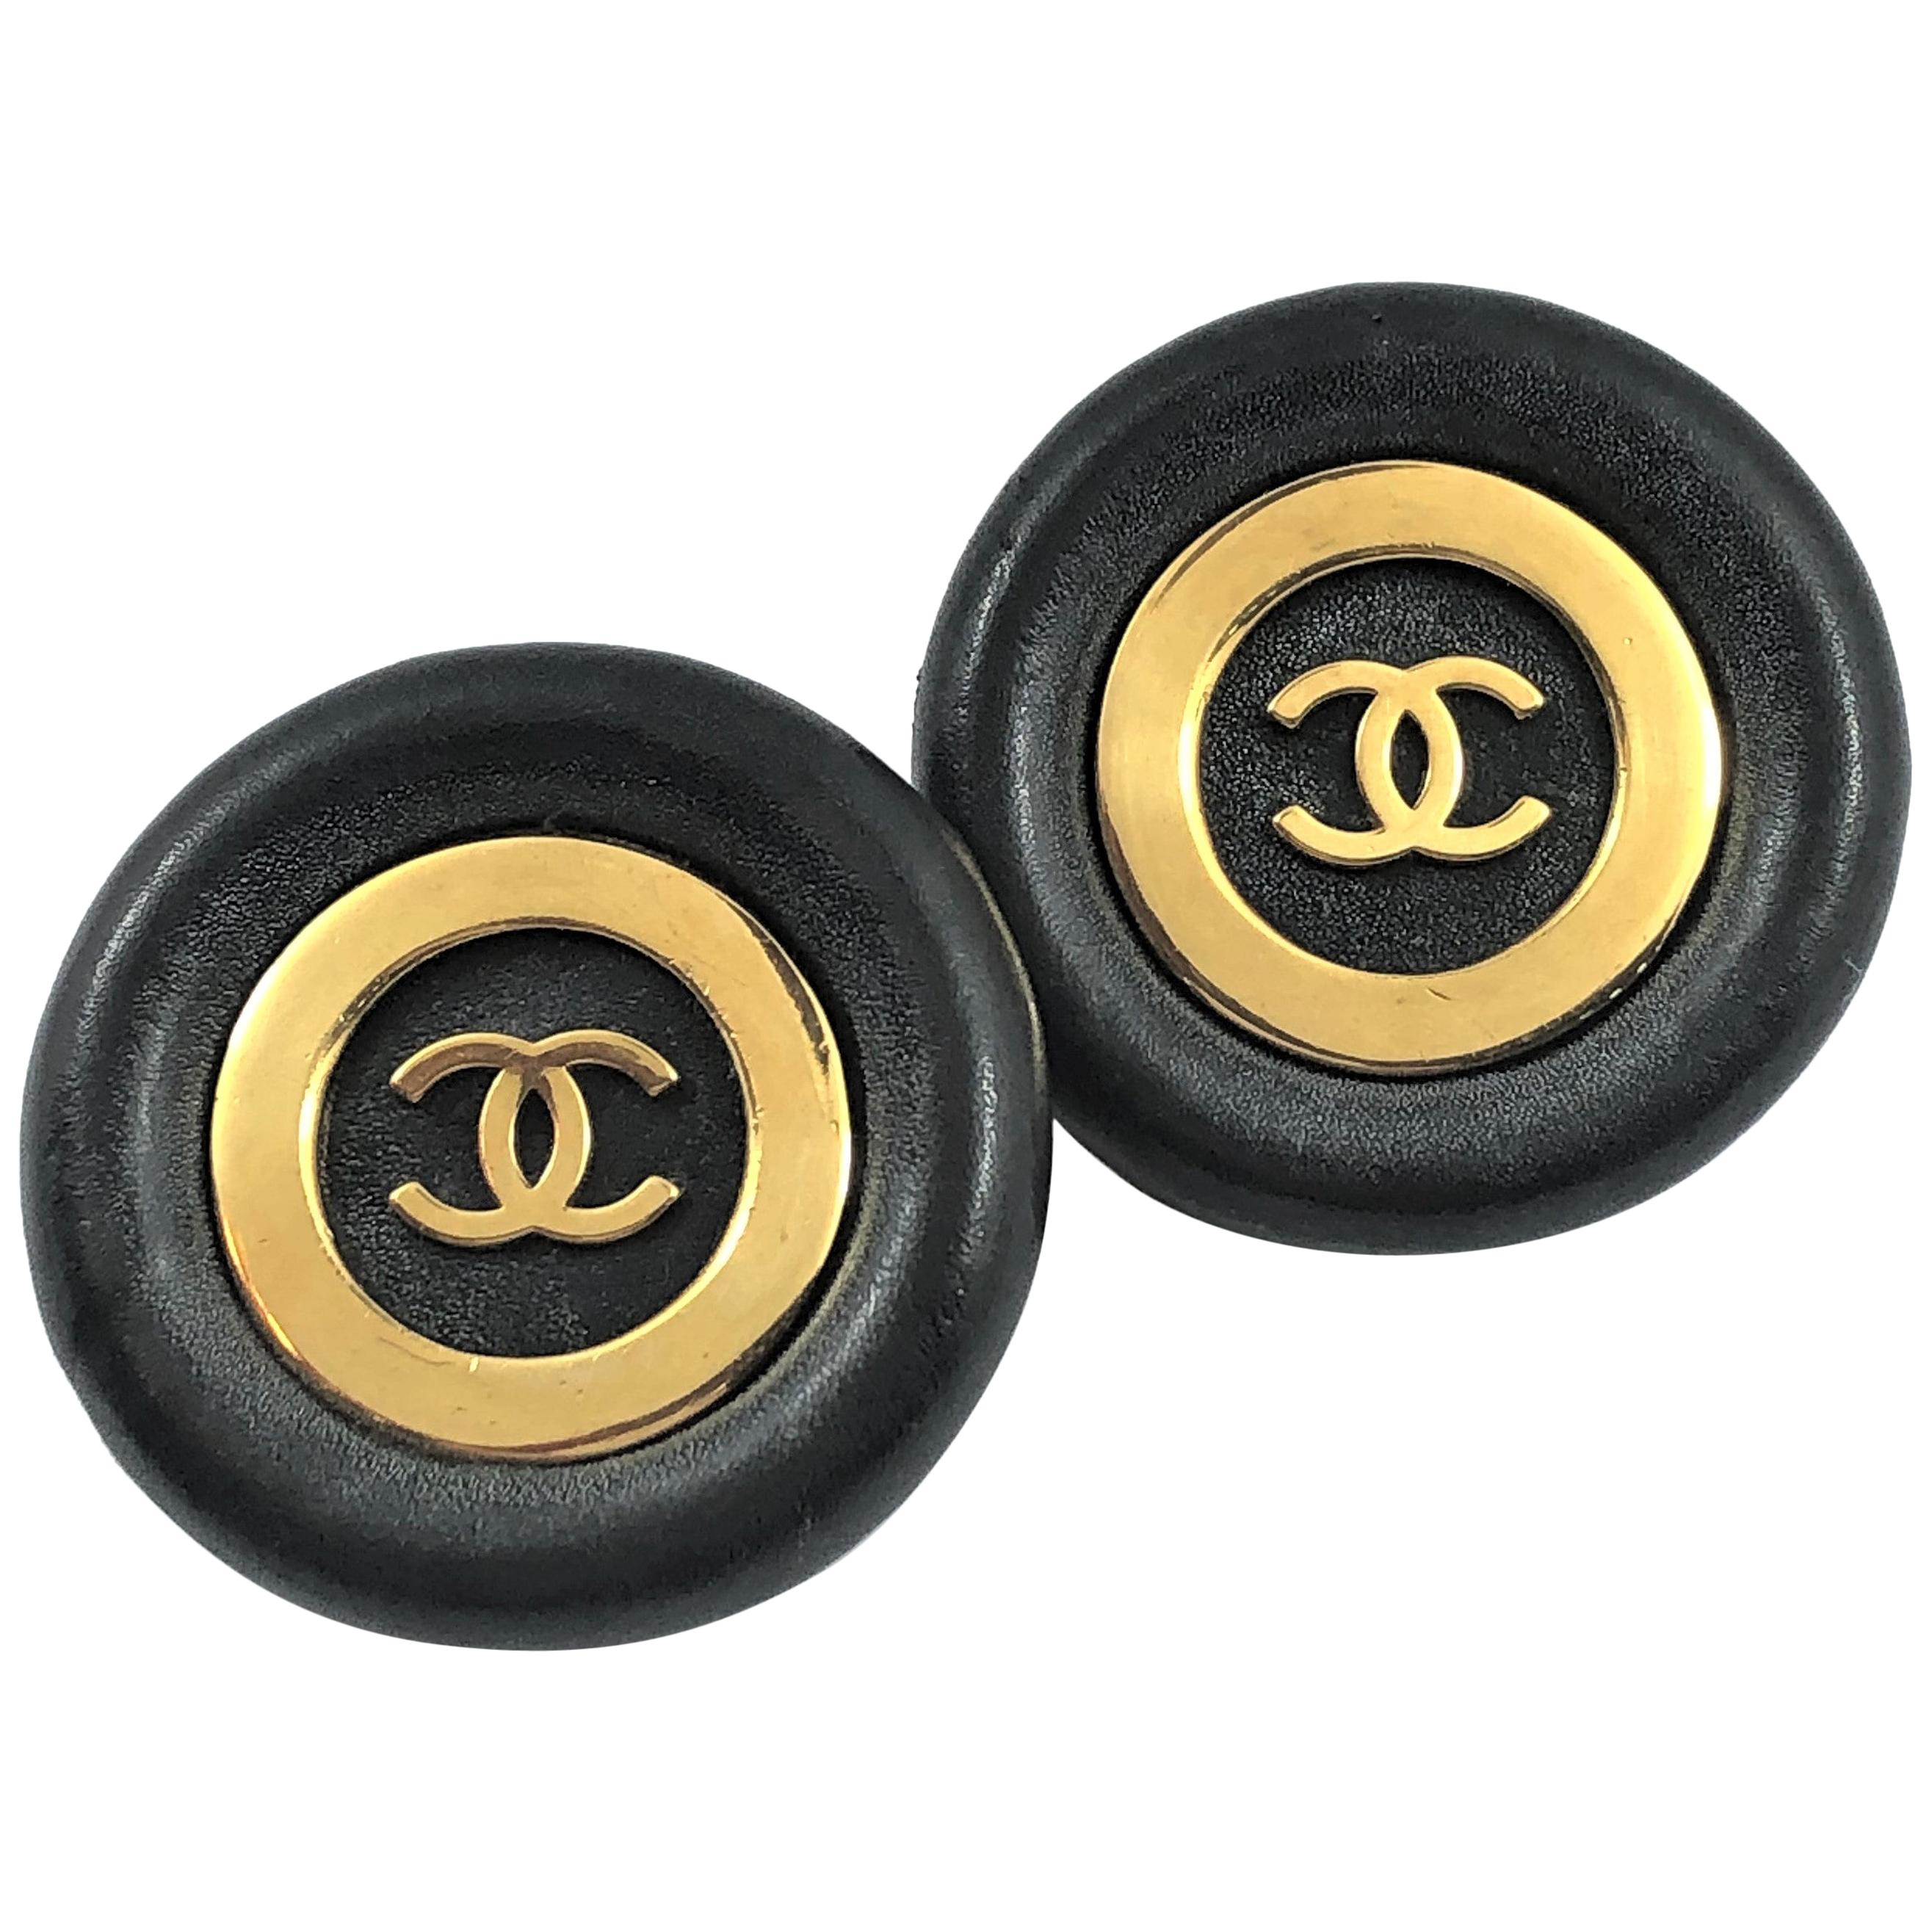 Vintage Chanel Jumbo Schwarze und goldfarbene Vintage-Ohrringe aus Leder 1  13/16 Zoll